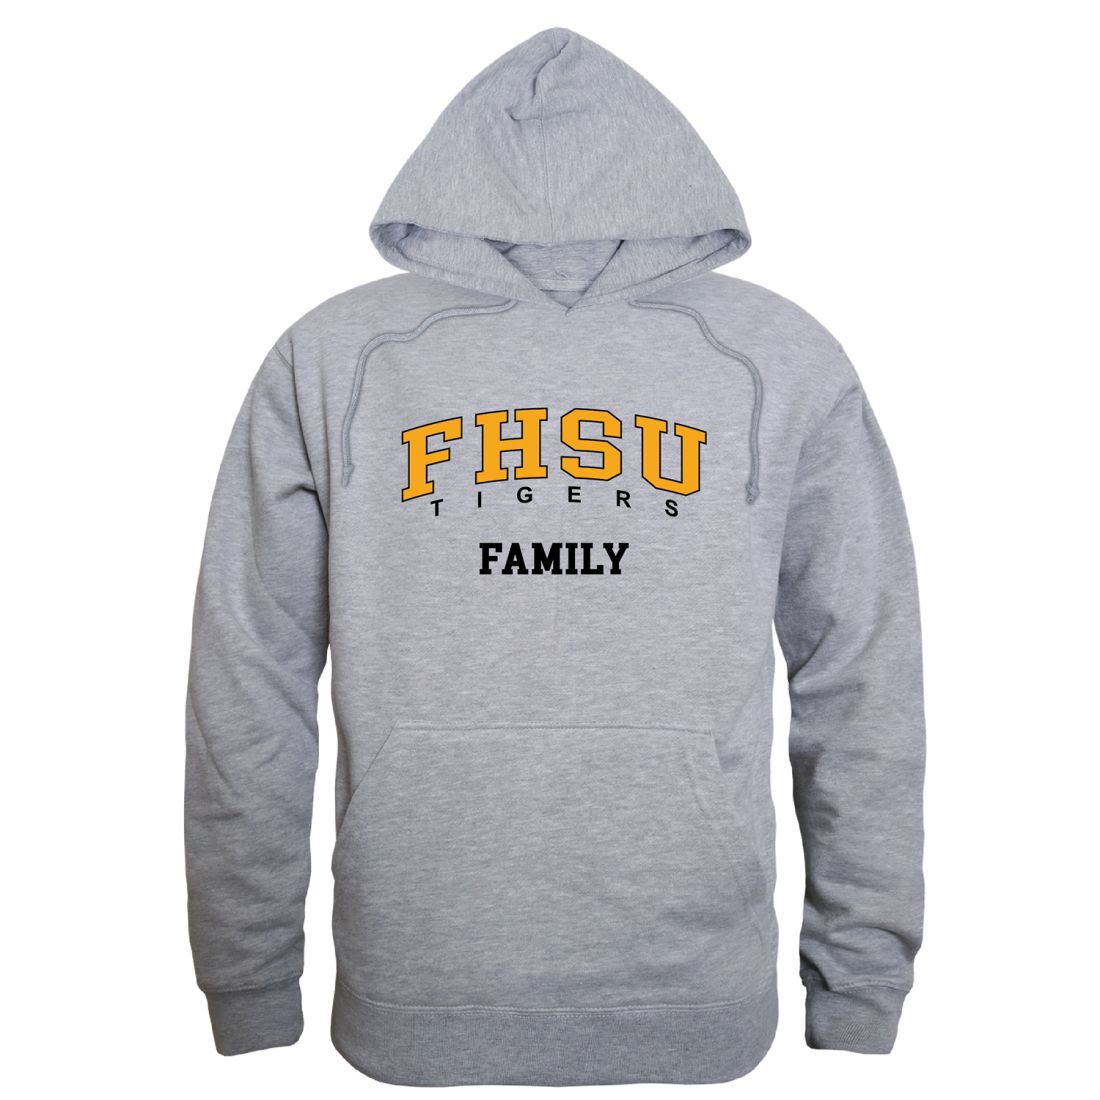 FHSU Fort Hays State University Tigers Family Hoodie Sweatshirts